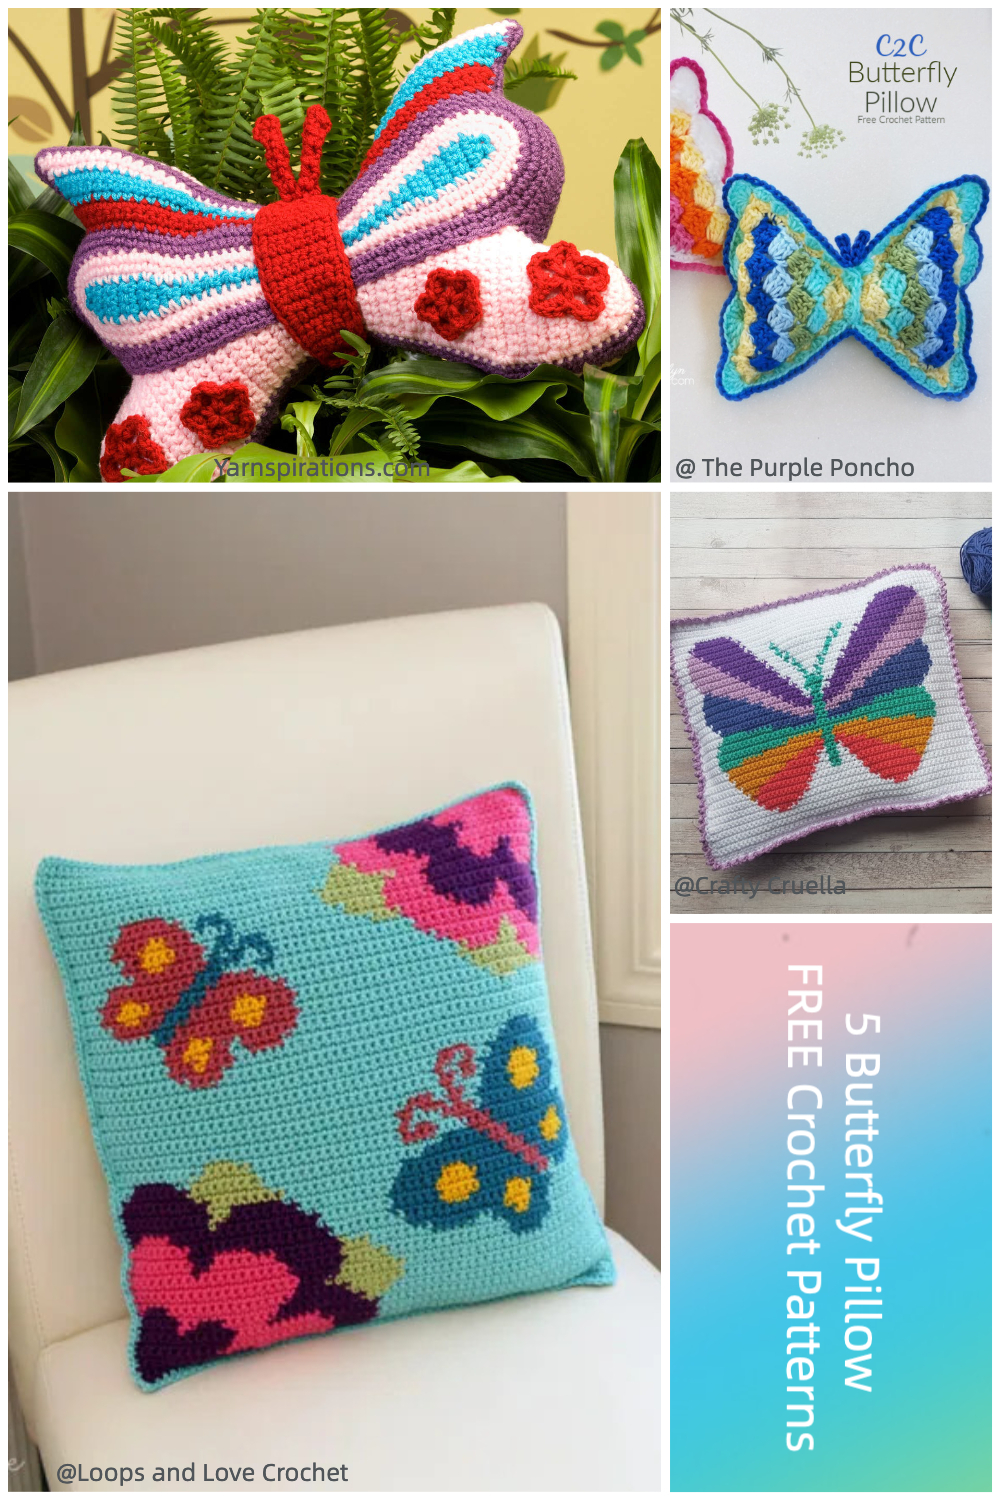 5 Butterfly Pillow FREE Crochet Patterns